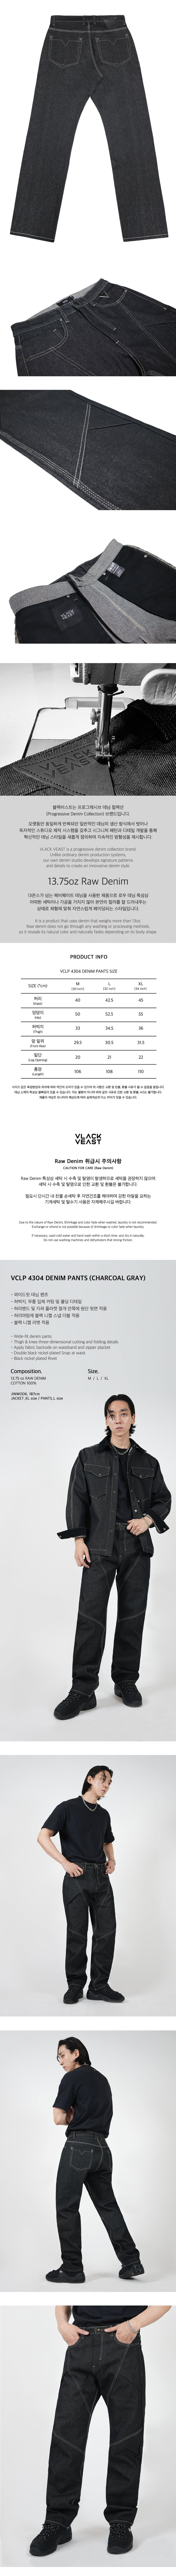 VC4304 _DENIM PANTS _Charcoal Gray